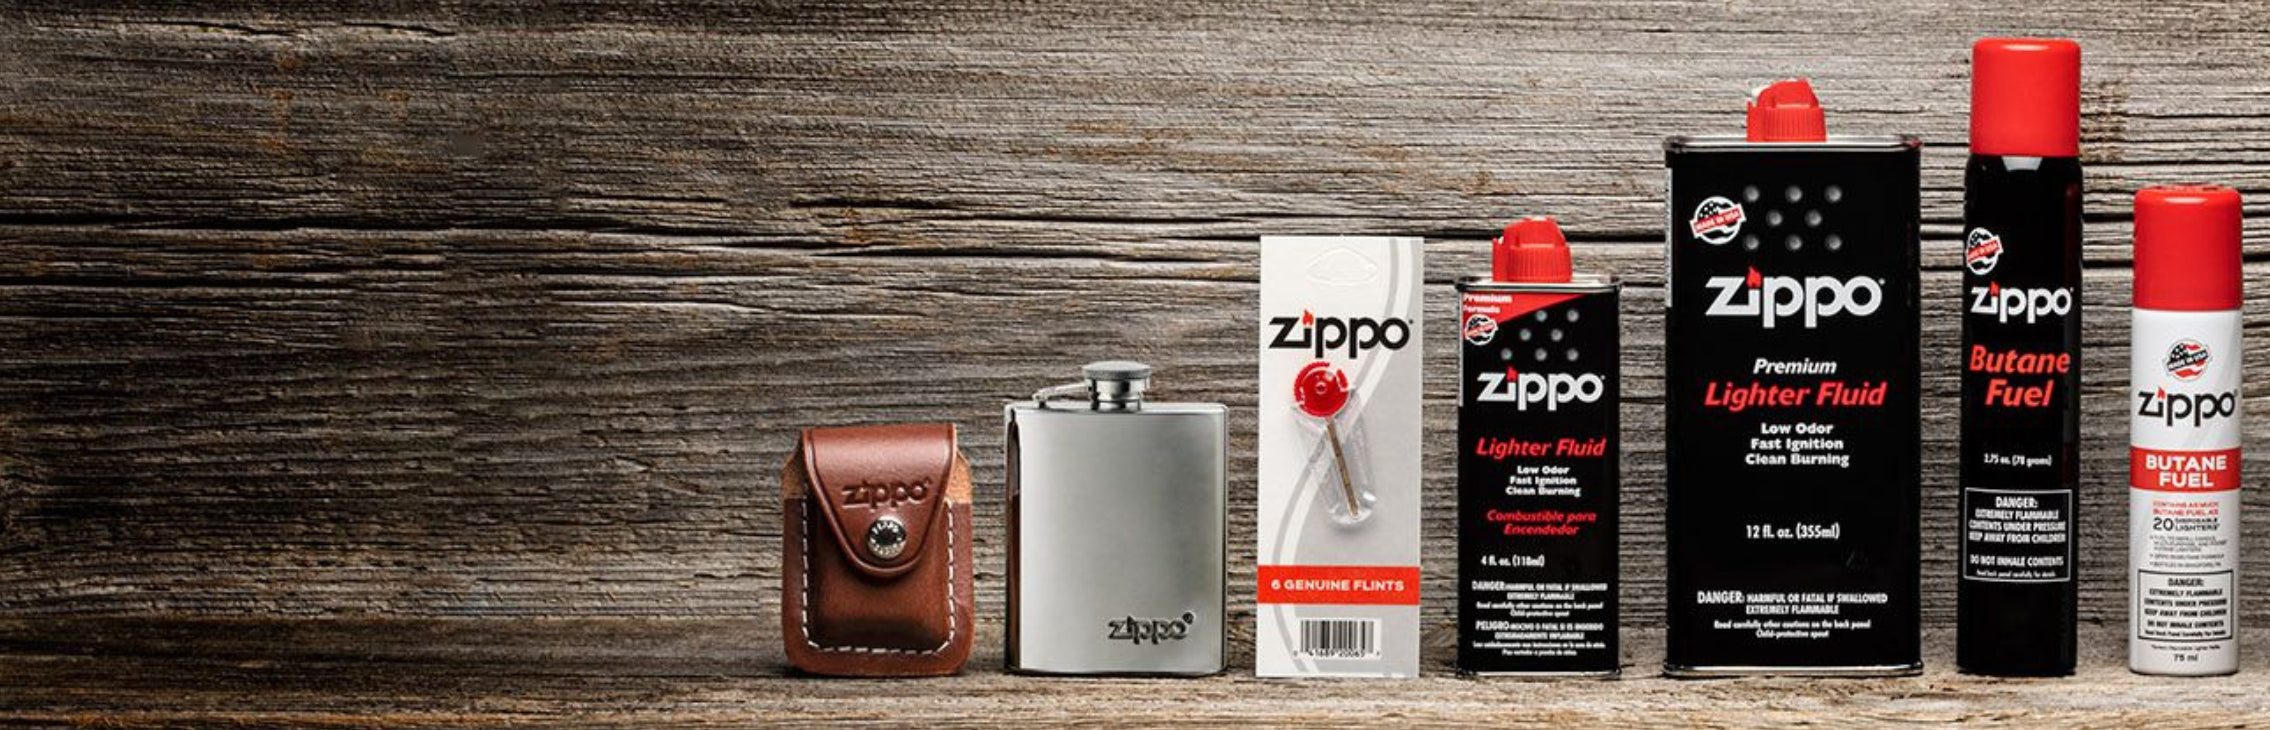 Zippo Lighters, Fluid, Butane, flints, wicks, and Zippo 